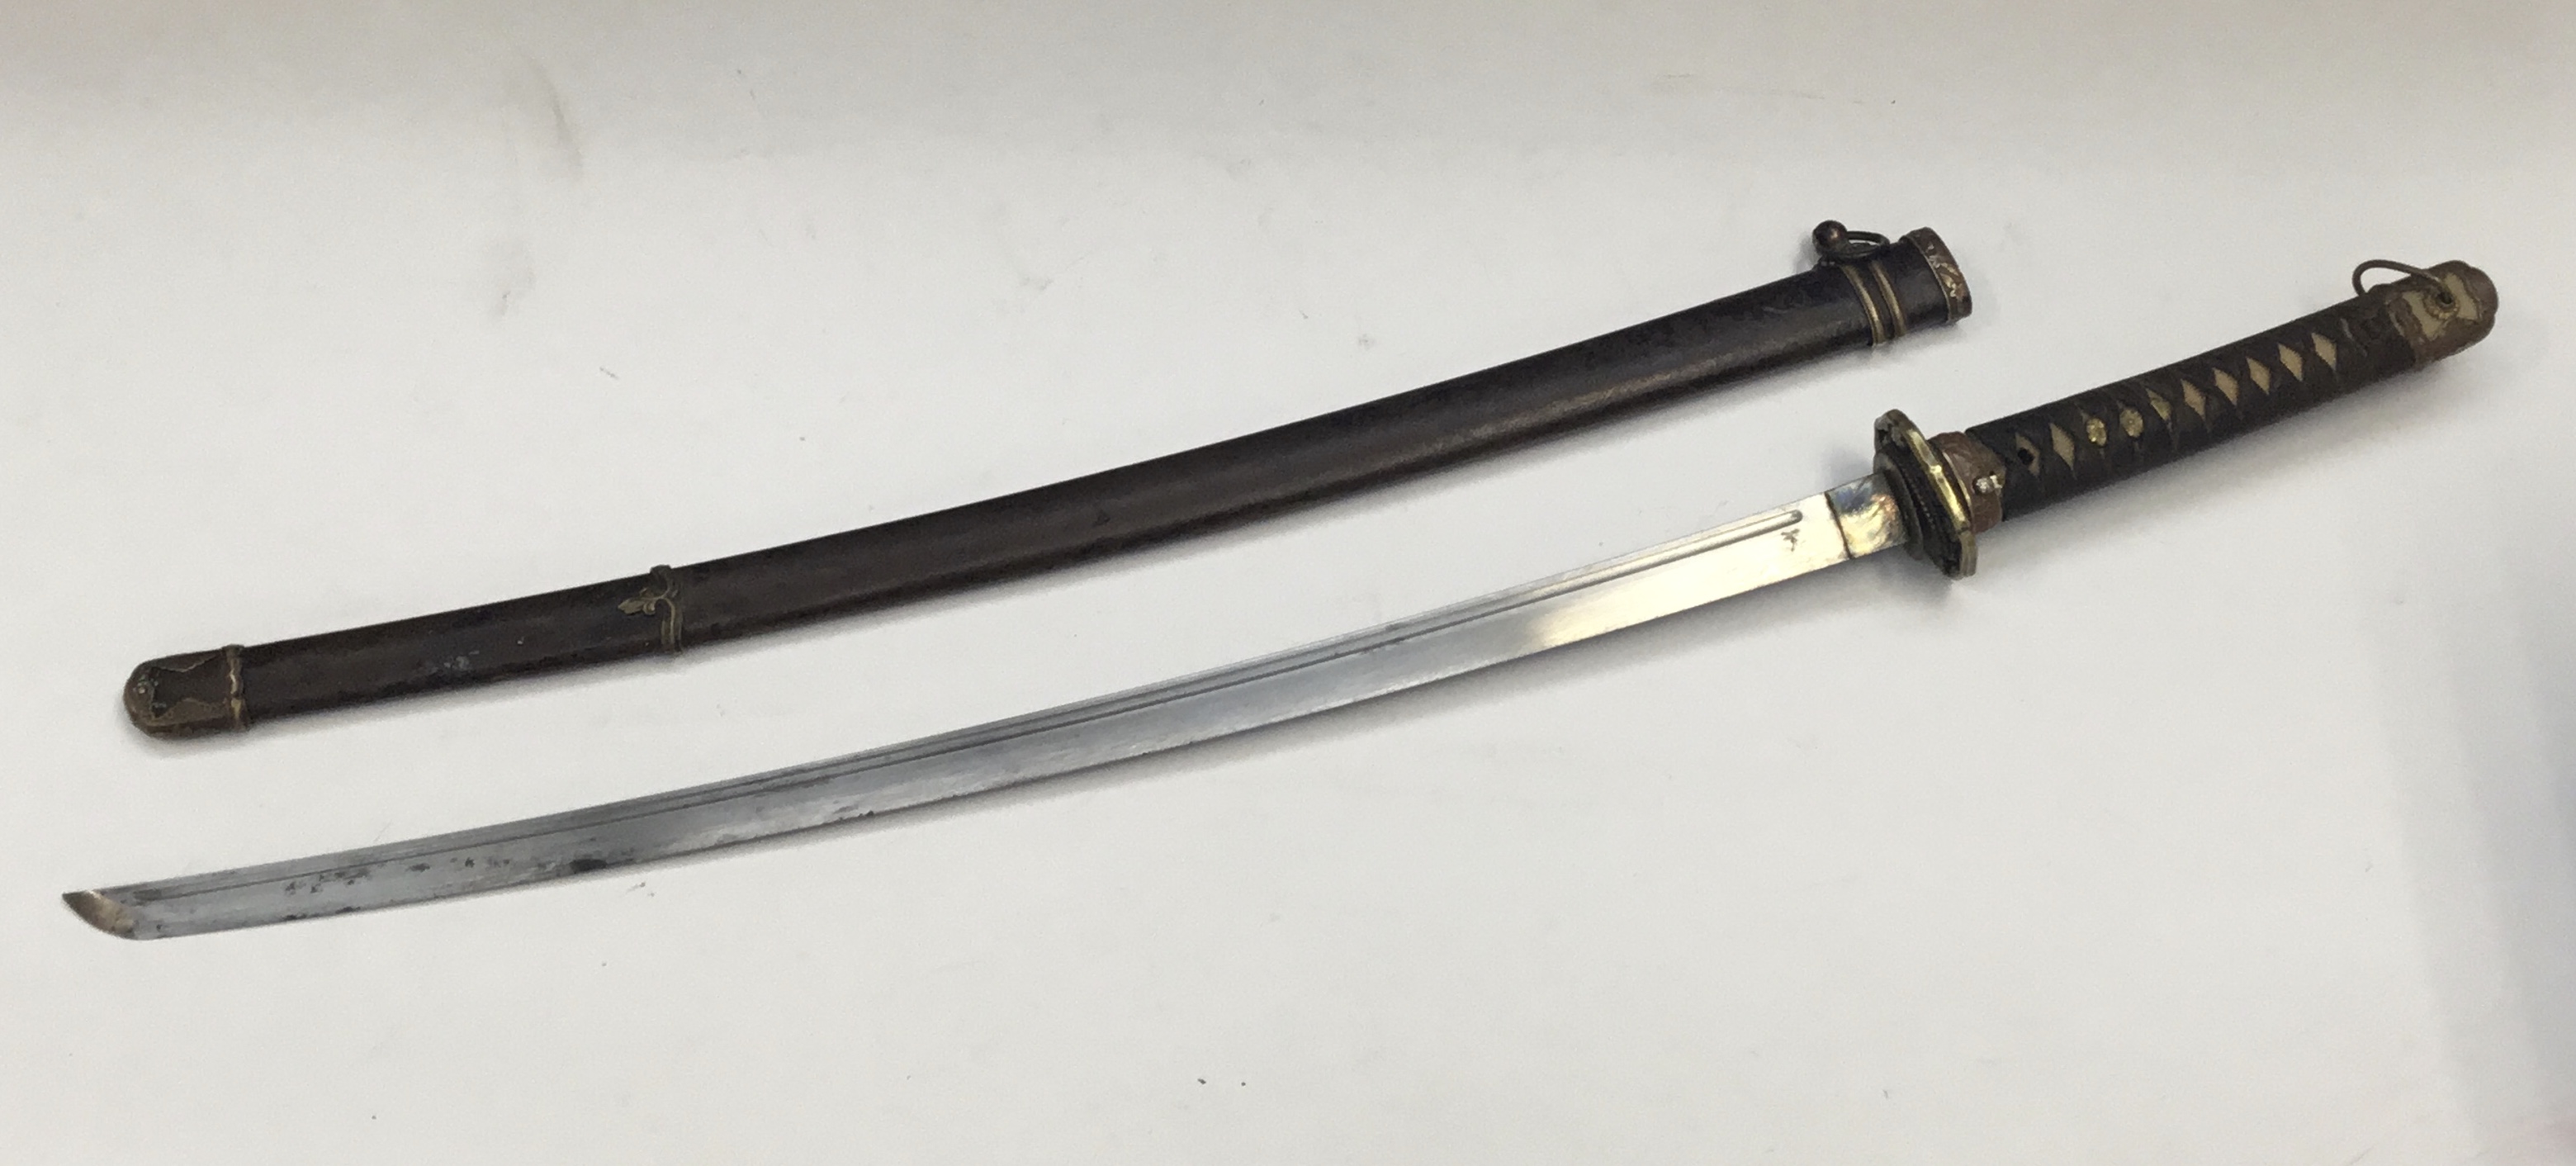 A WW2 era Japanese Katana sword. Shagreen handle with leather wrap, bronze mounts and tsuba. - Image 7 of 11